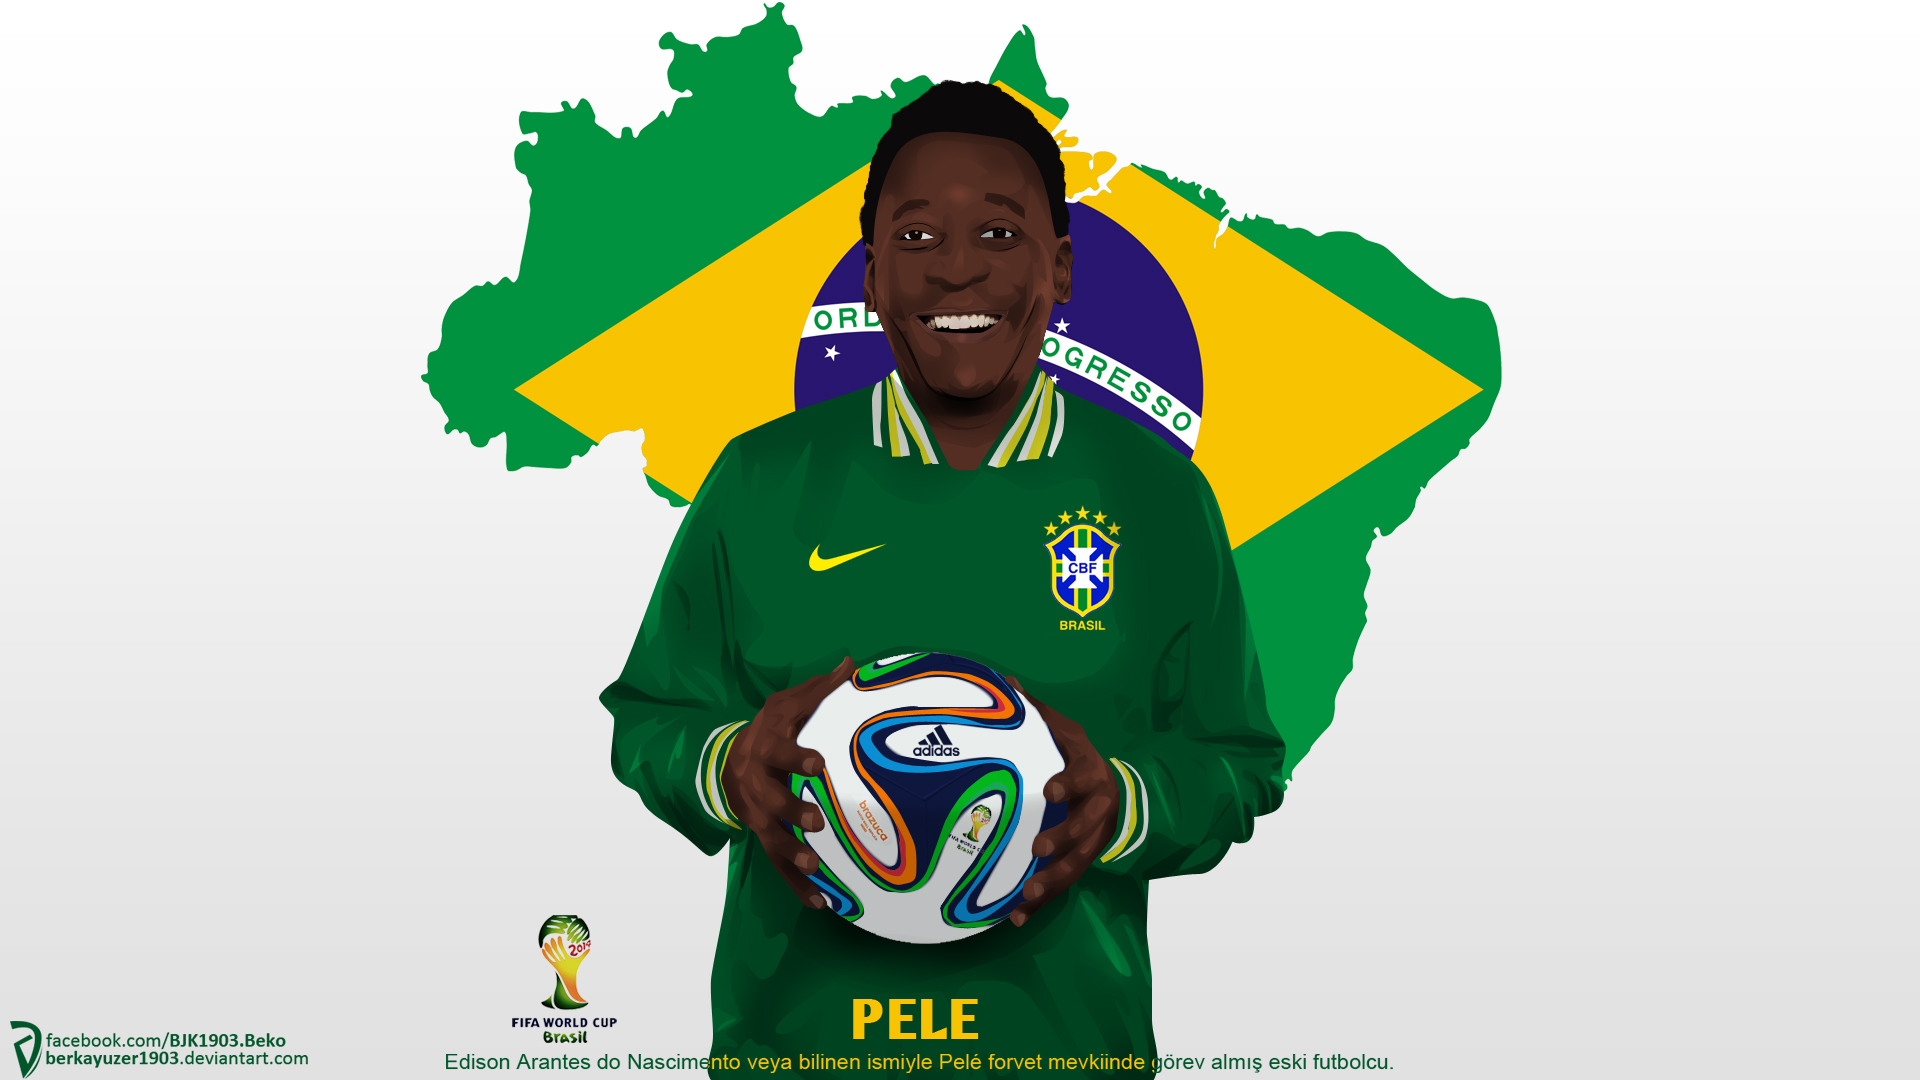 Pele lives on in 738 children named after him in Peru